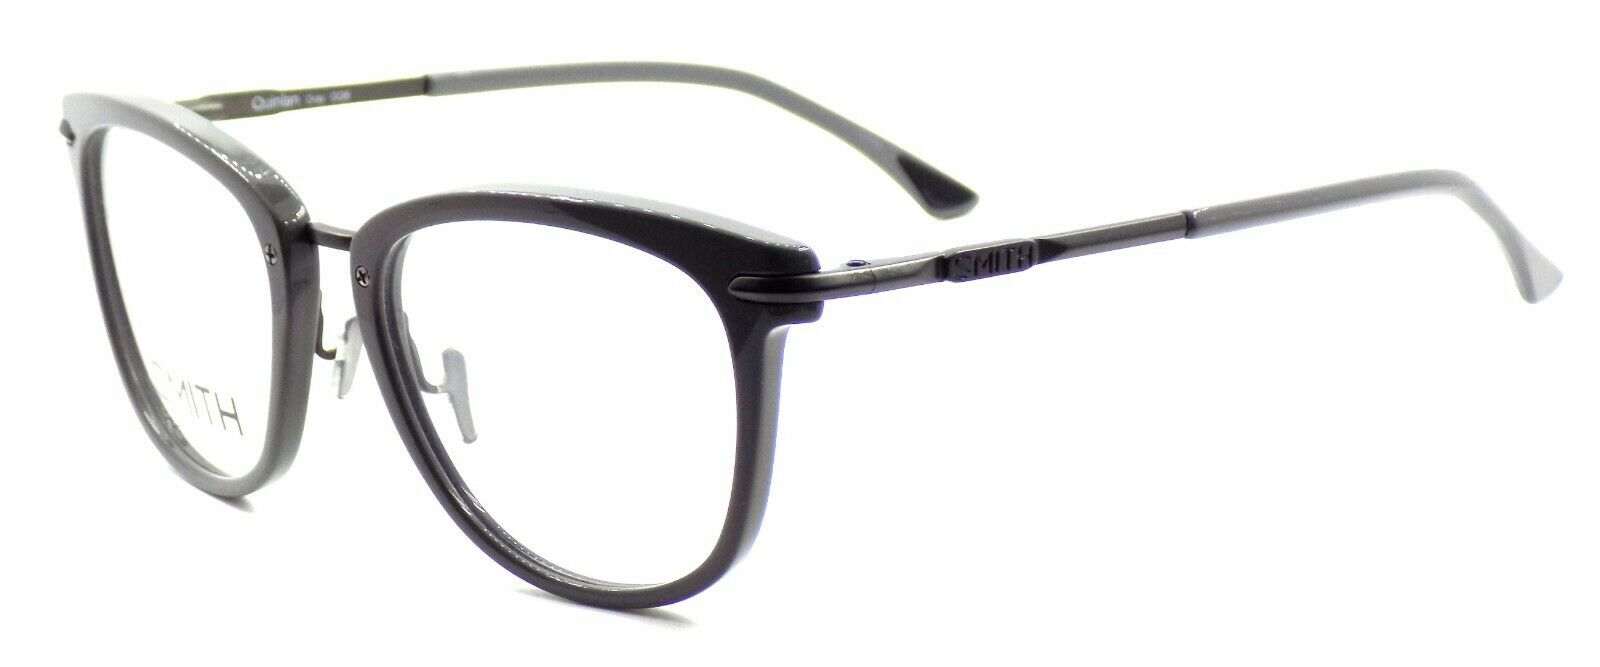 1-SMITH Optics Quinlan GQ6 Unisex Eyeglasses Frames 51-19-140 Wood Gray + CASE-715757454173-IKSpecs